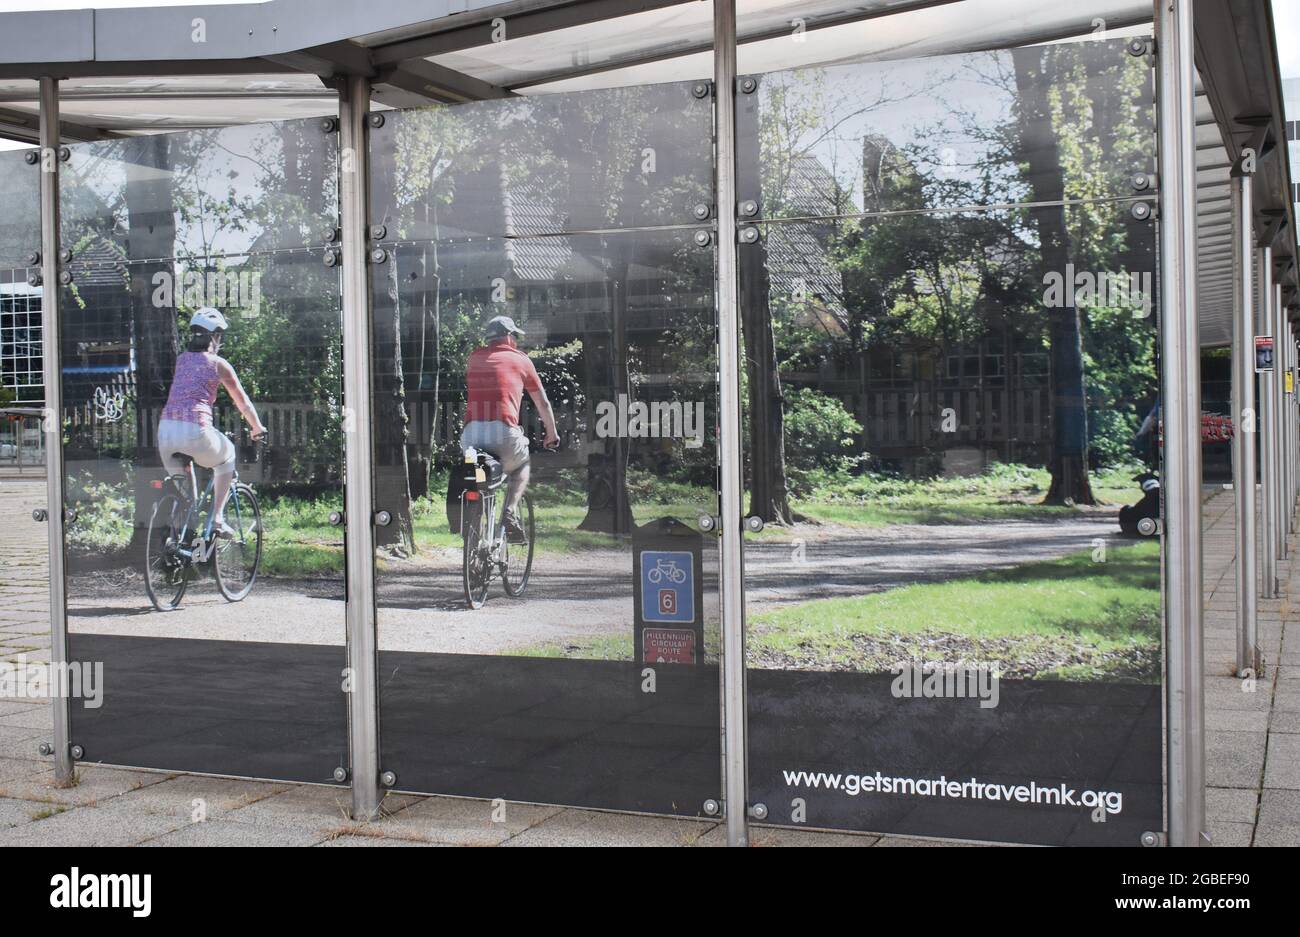 Trompe-l'œil advertising for Get Smarter Travel MK on the bike racks at Station Square, Milton Keynes. Stock Photo